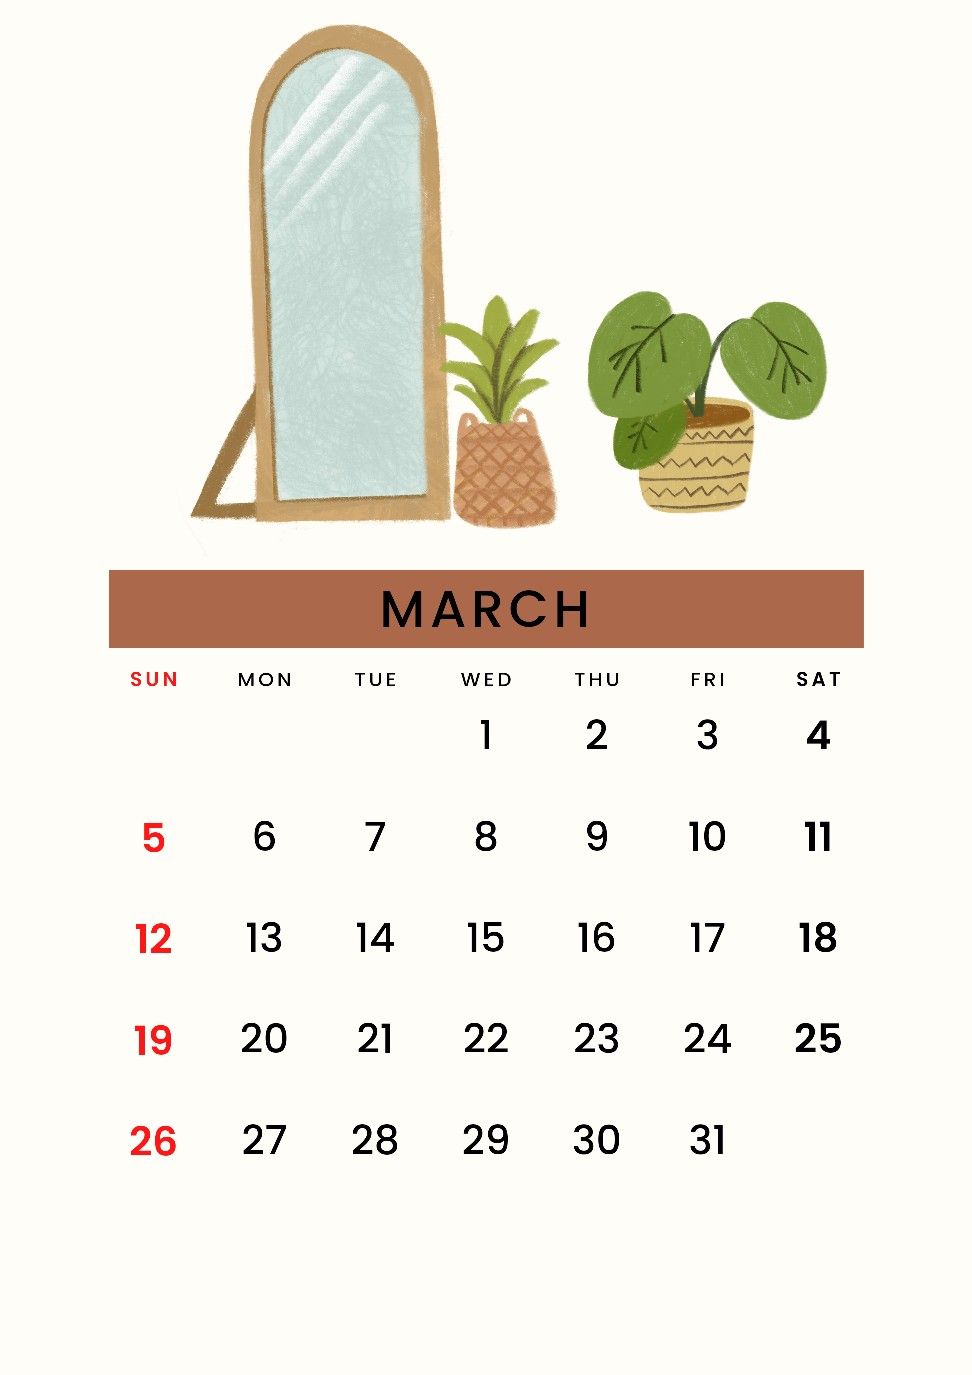  2023 Kalender Hintergrundbild 972x1375. March calendar 2023 boho aesthetic style in 2023. Kartu ucapan buatan tangan, Kalender, Kartu